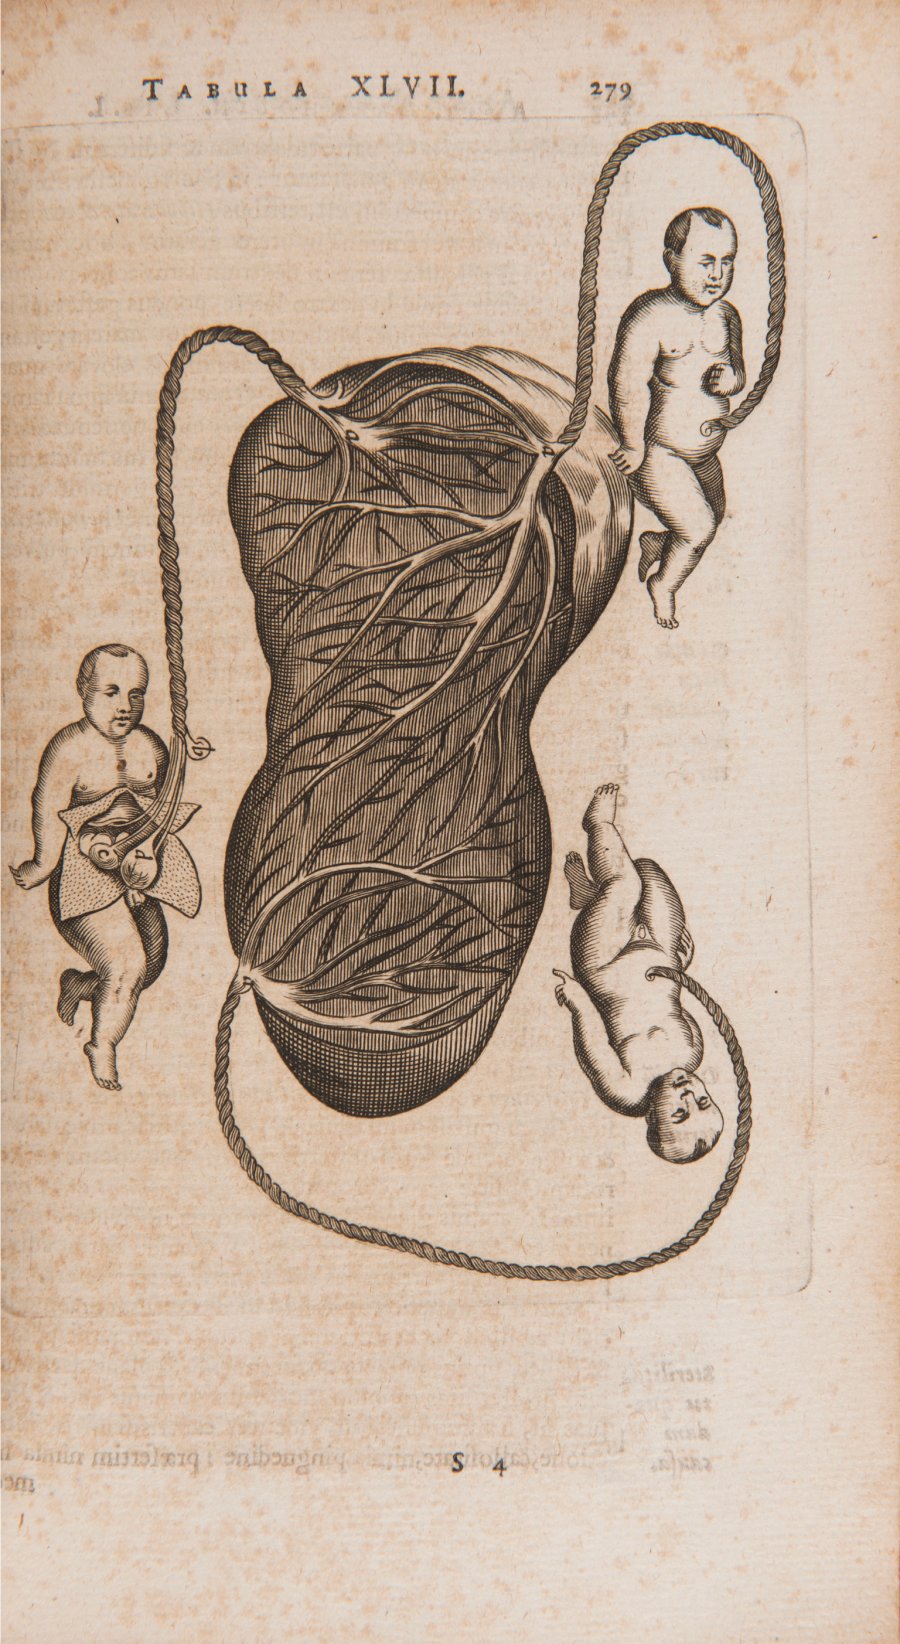 ANATOME QUARTUM RENOVATA (Anatomie, 4. Ausgabe)